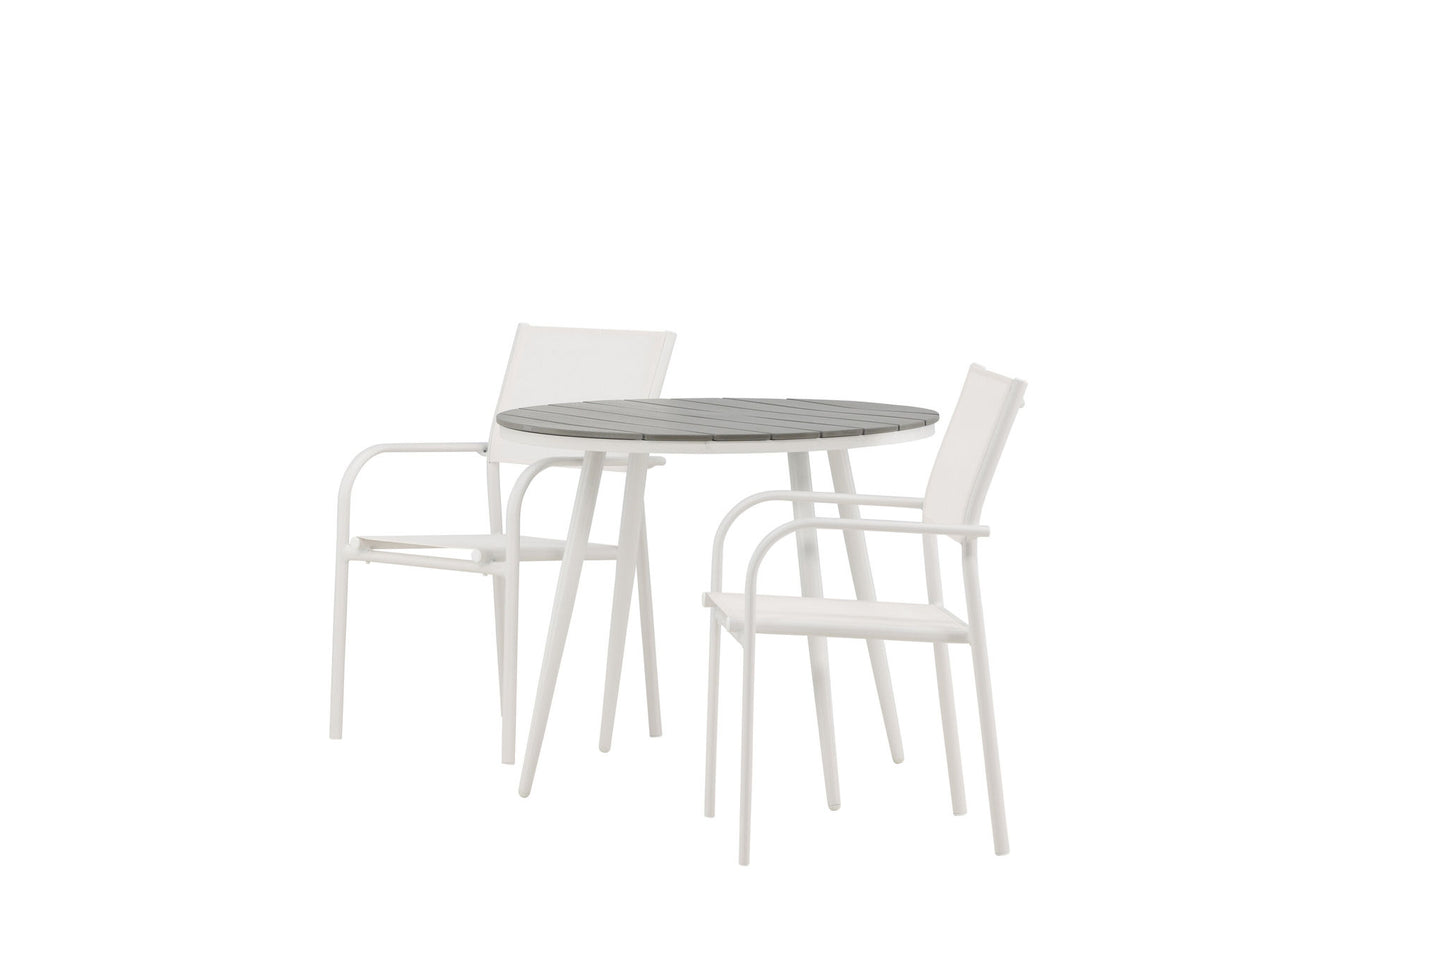 Break - Spisebord, Rundt - Hvid / Grå - Alu / Nonwood - 90ø Santorini Stol m. armlæn (Stabelbar) - Hvid Alu / Hvid Tekstil